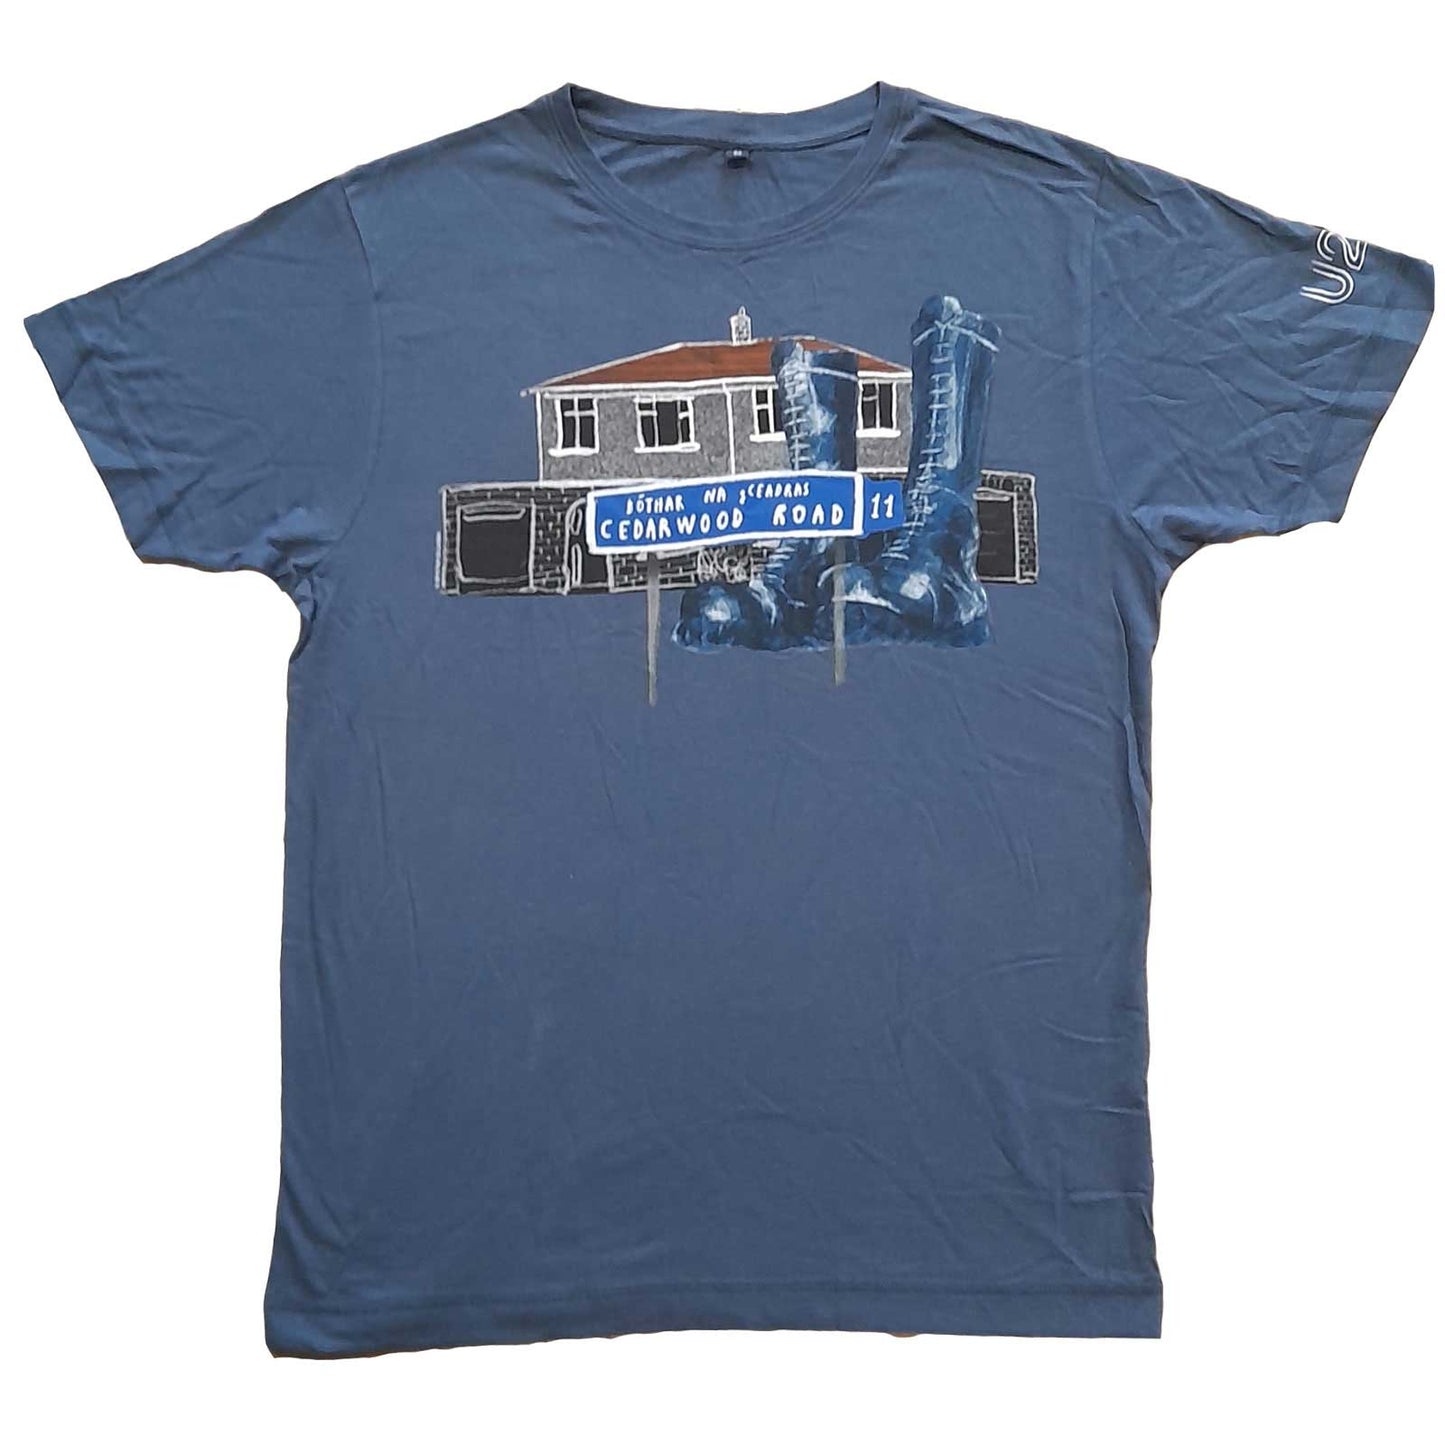 U2 T-Shirt: Cedar Wood Road